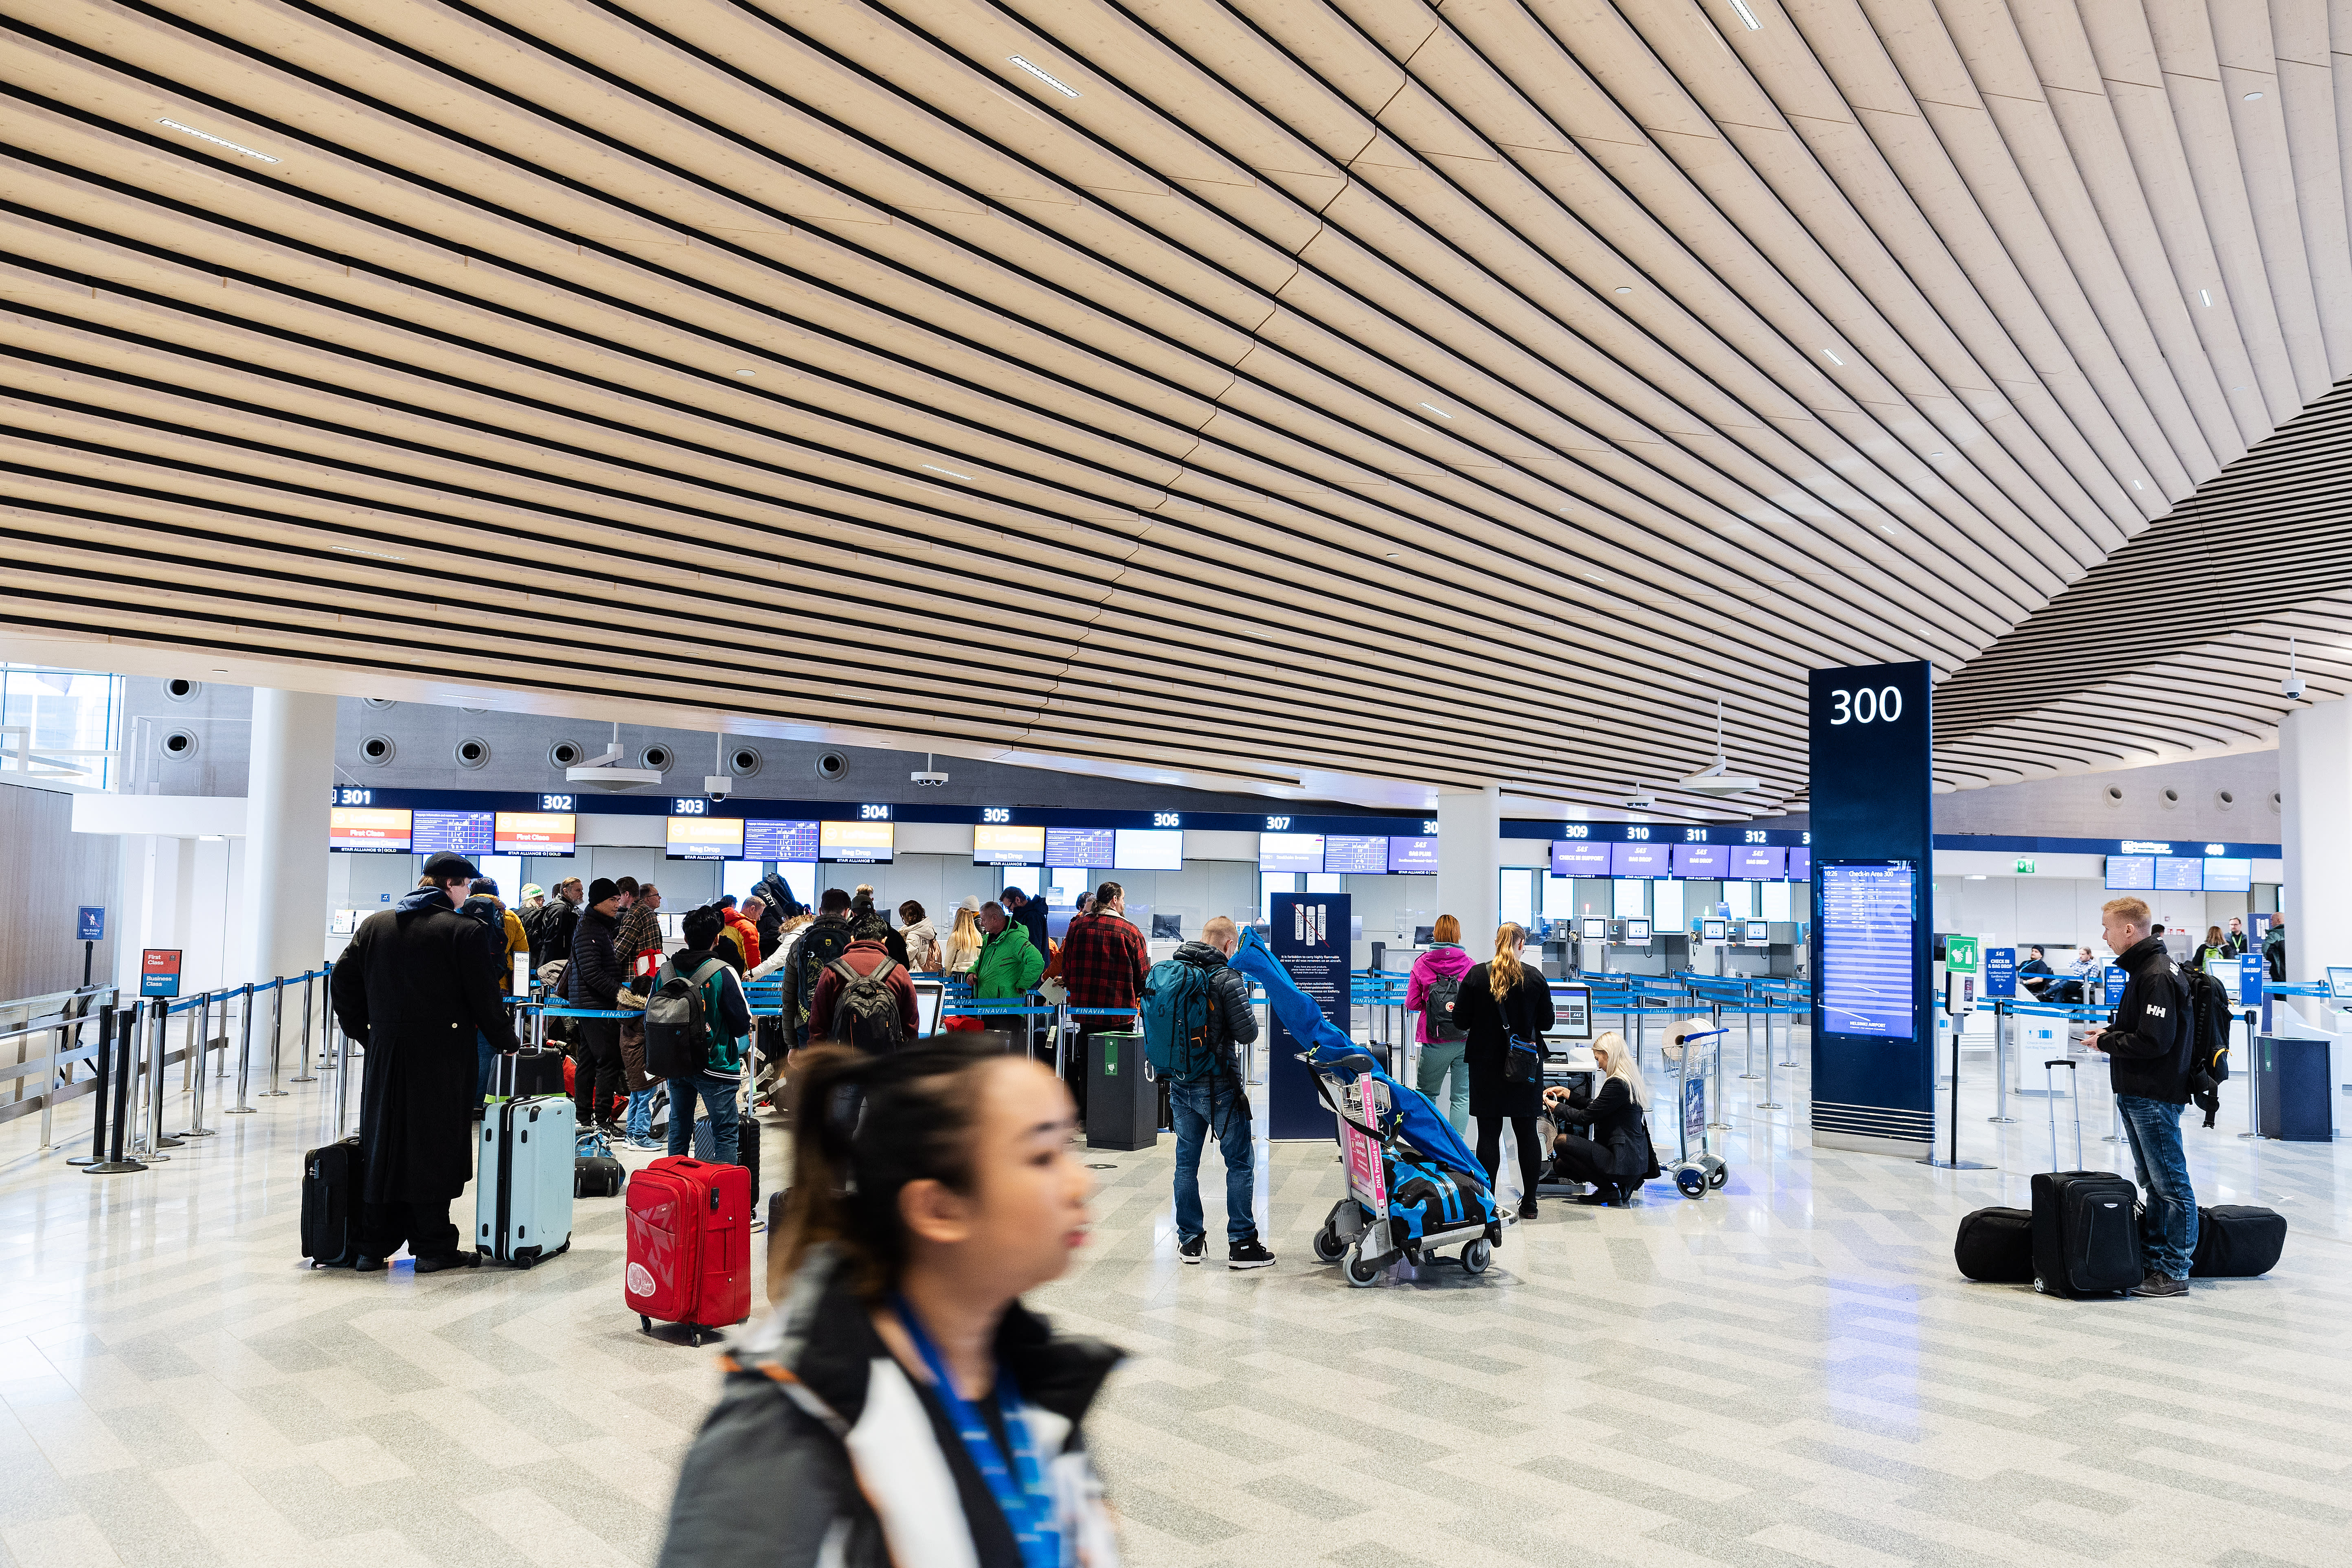 Helsinki-Vantaa Airport was awarded the best customer experience award in Europe